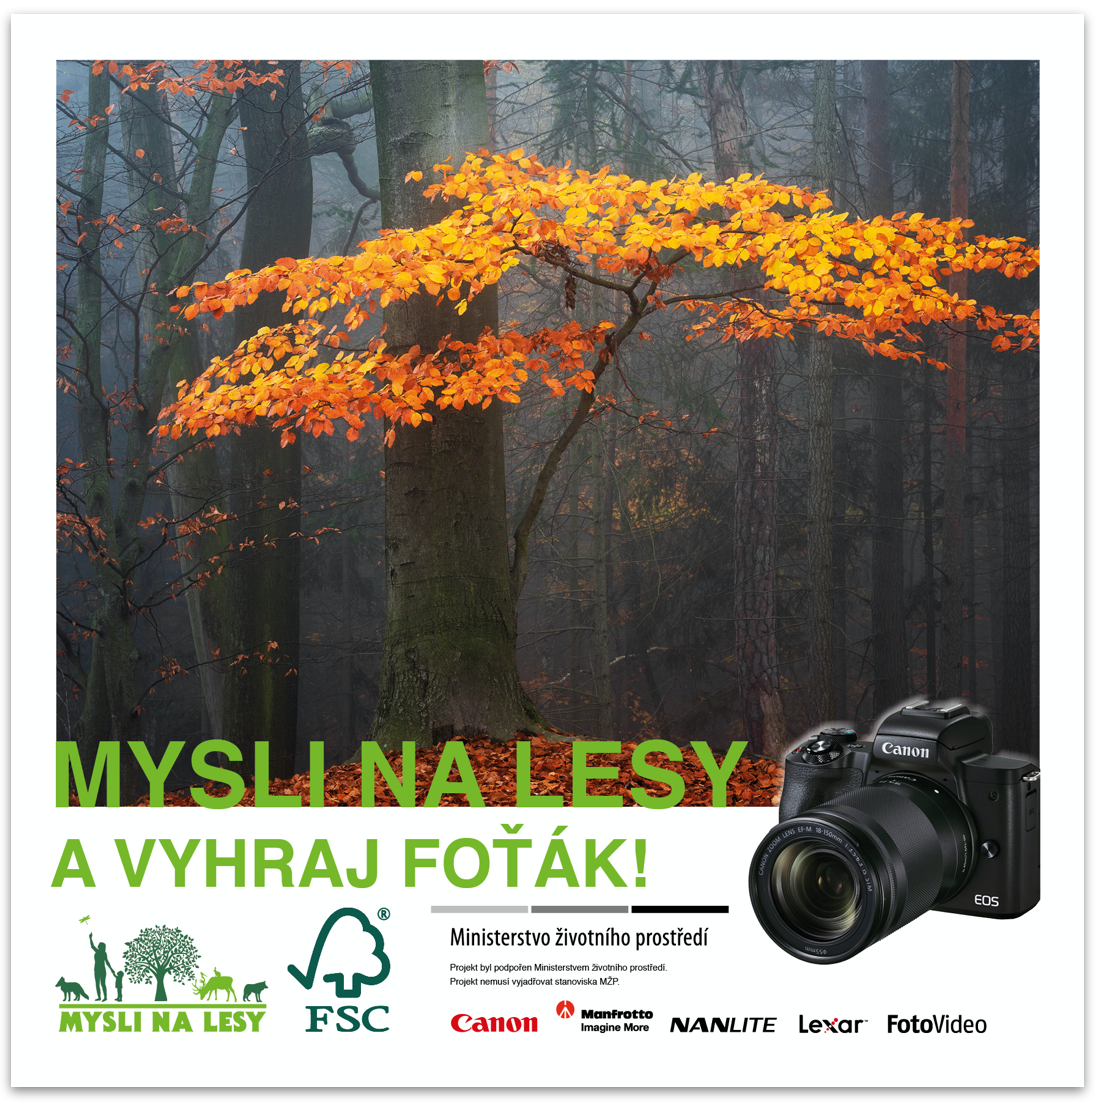 a flyer for the Mysli na lesy photo competition